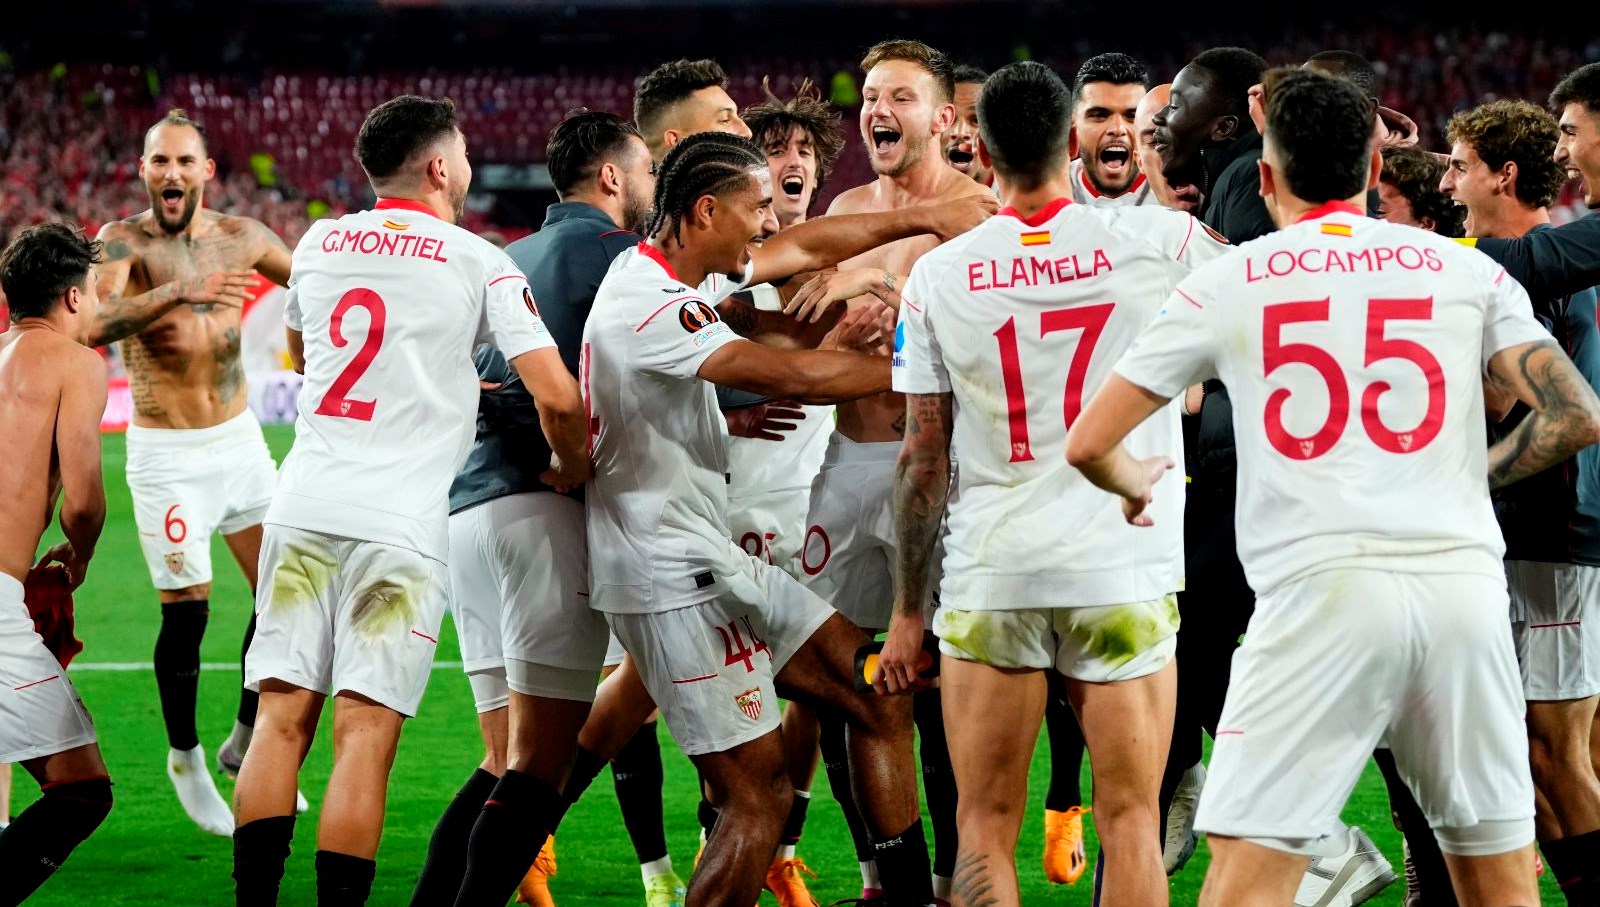 Sevilla-Roma kupa maçı saat kaçta, hangi kanalda ve şifresiz mi? (UEFA Avrupa Ligi finali)